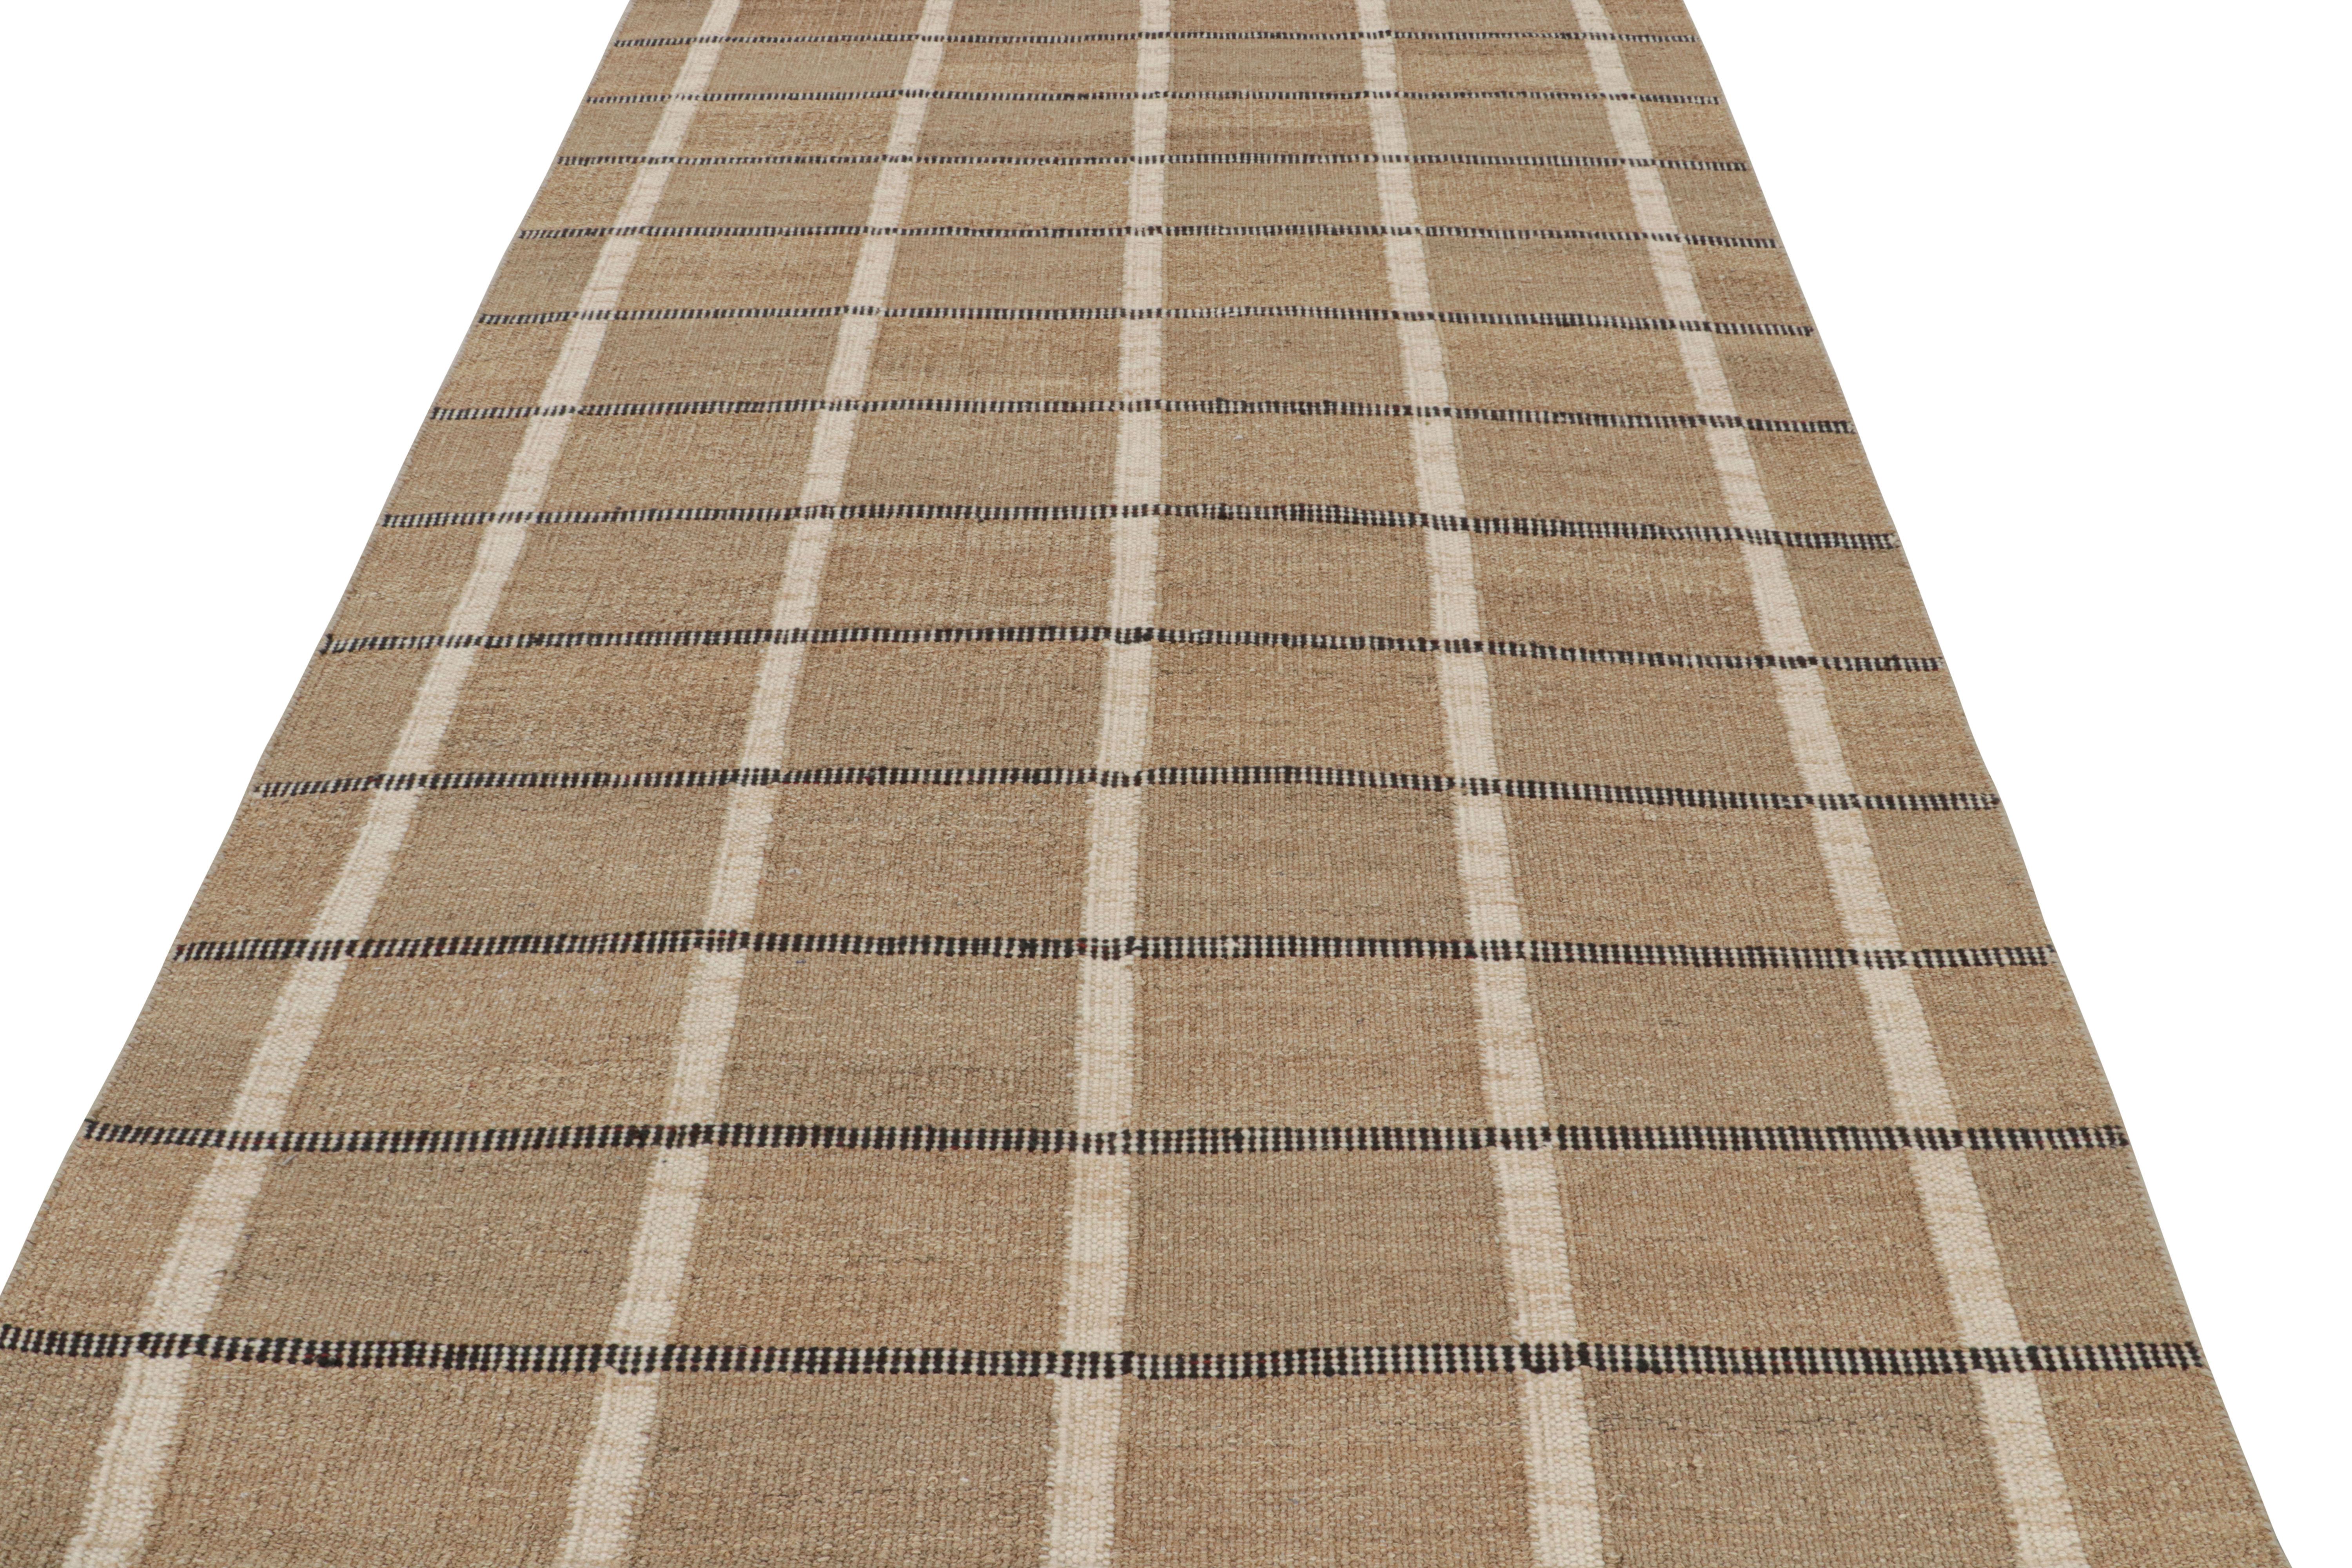 Indian Rug & Kilim’s Hemp Scandinavian Style Rug in Beige-Brown with Geometric Pattern For Sale